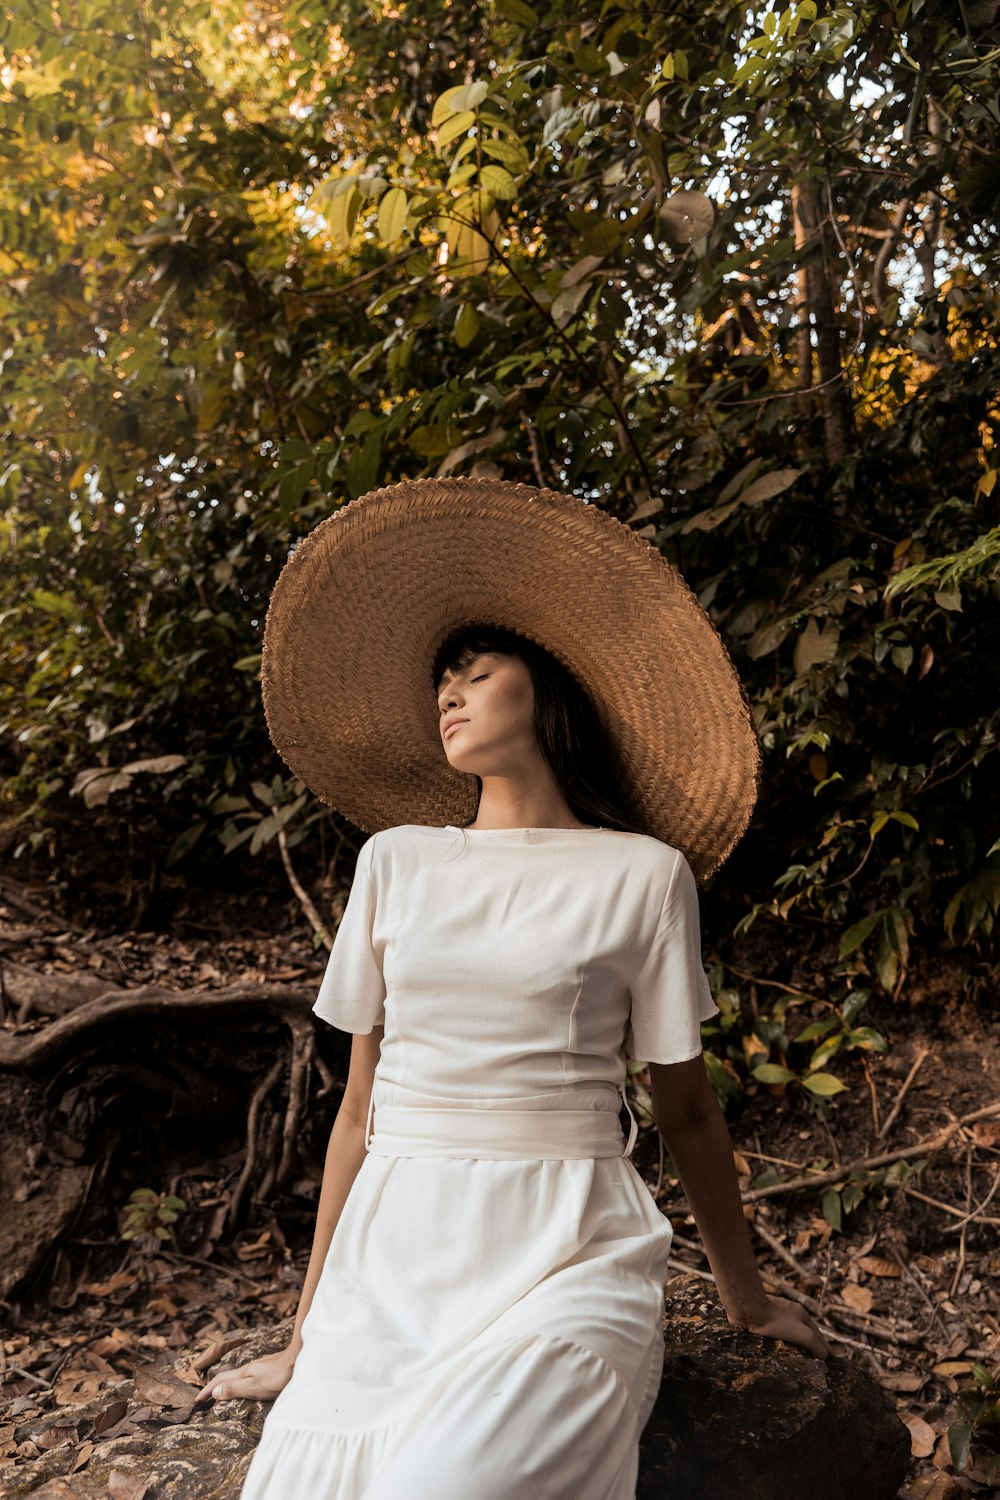 woman in white dress wearing brown straw hat standing near green plants